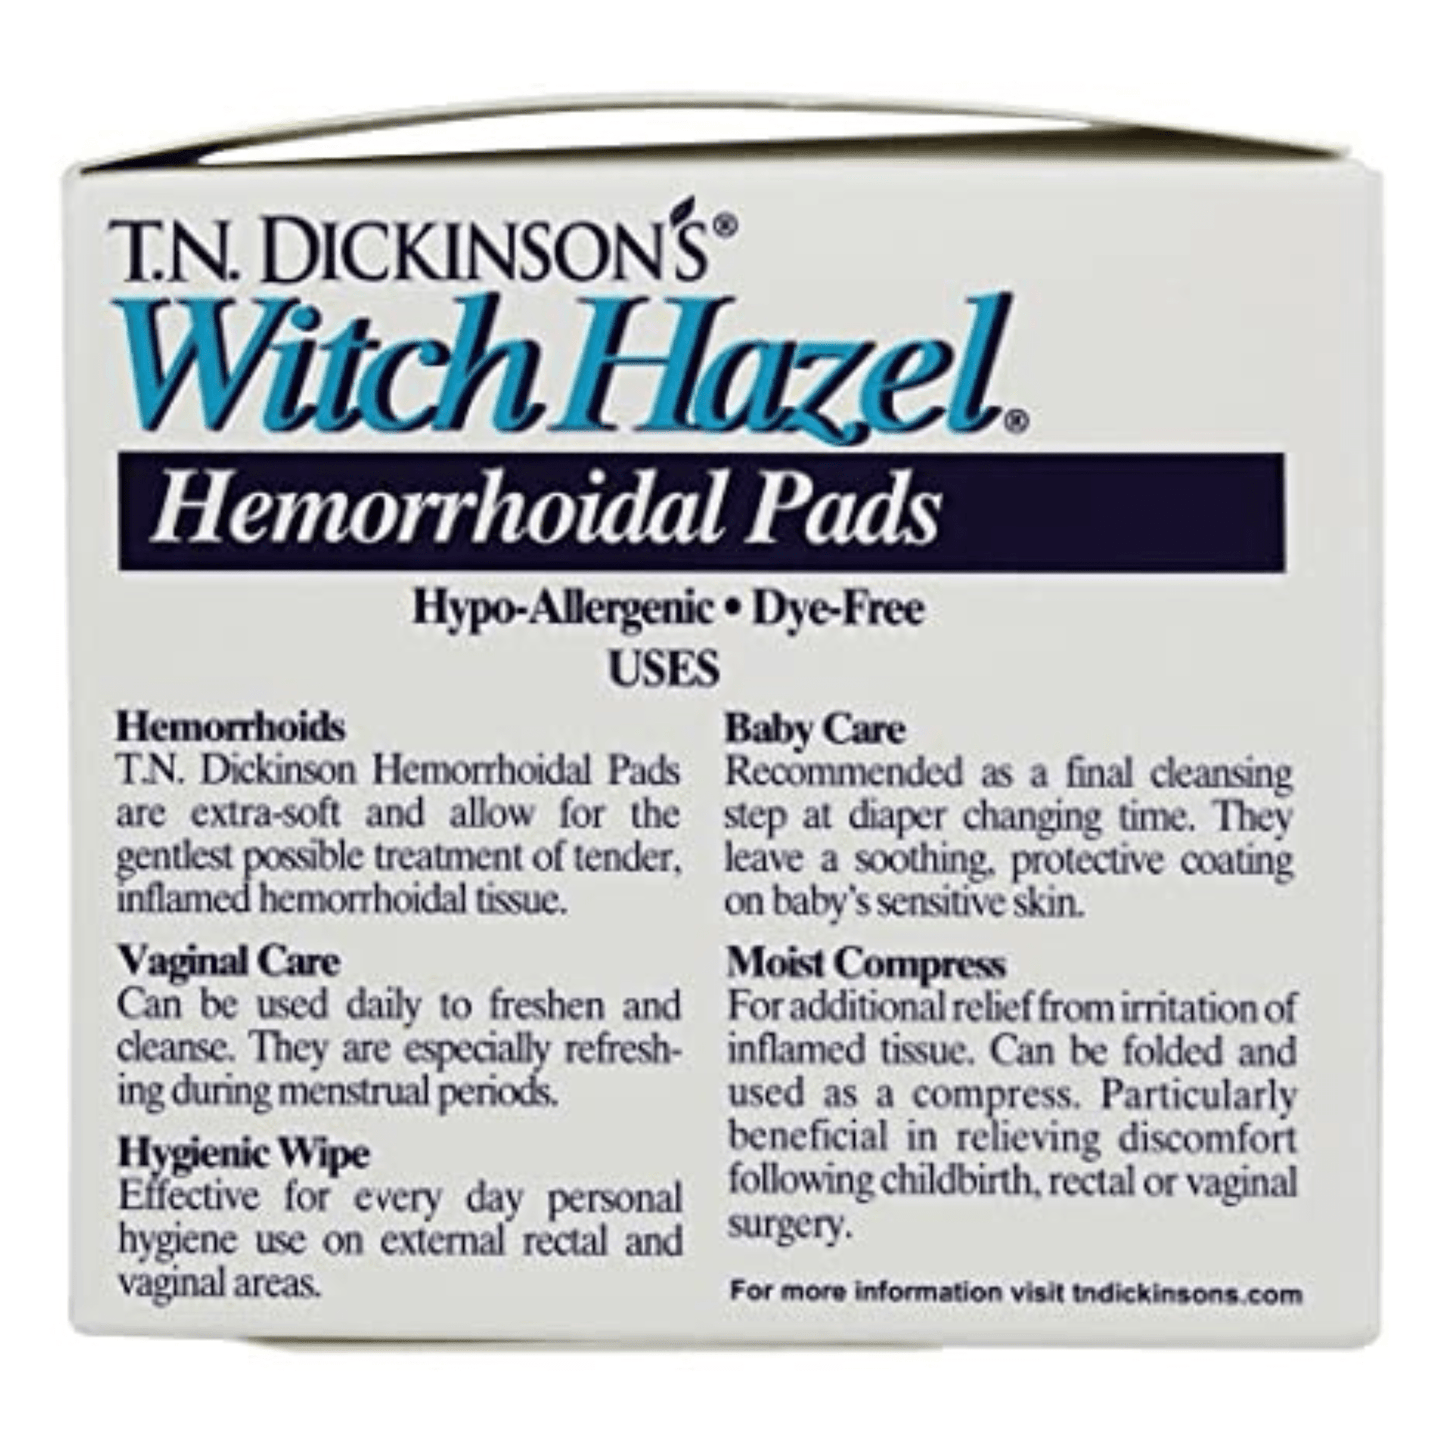 Alternate Image of Witch Hazel Hemorrhoidal Pads Uses